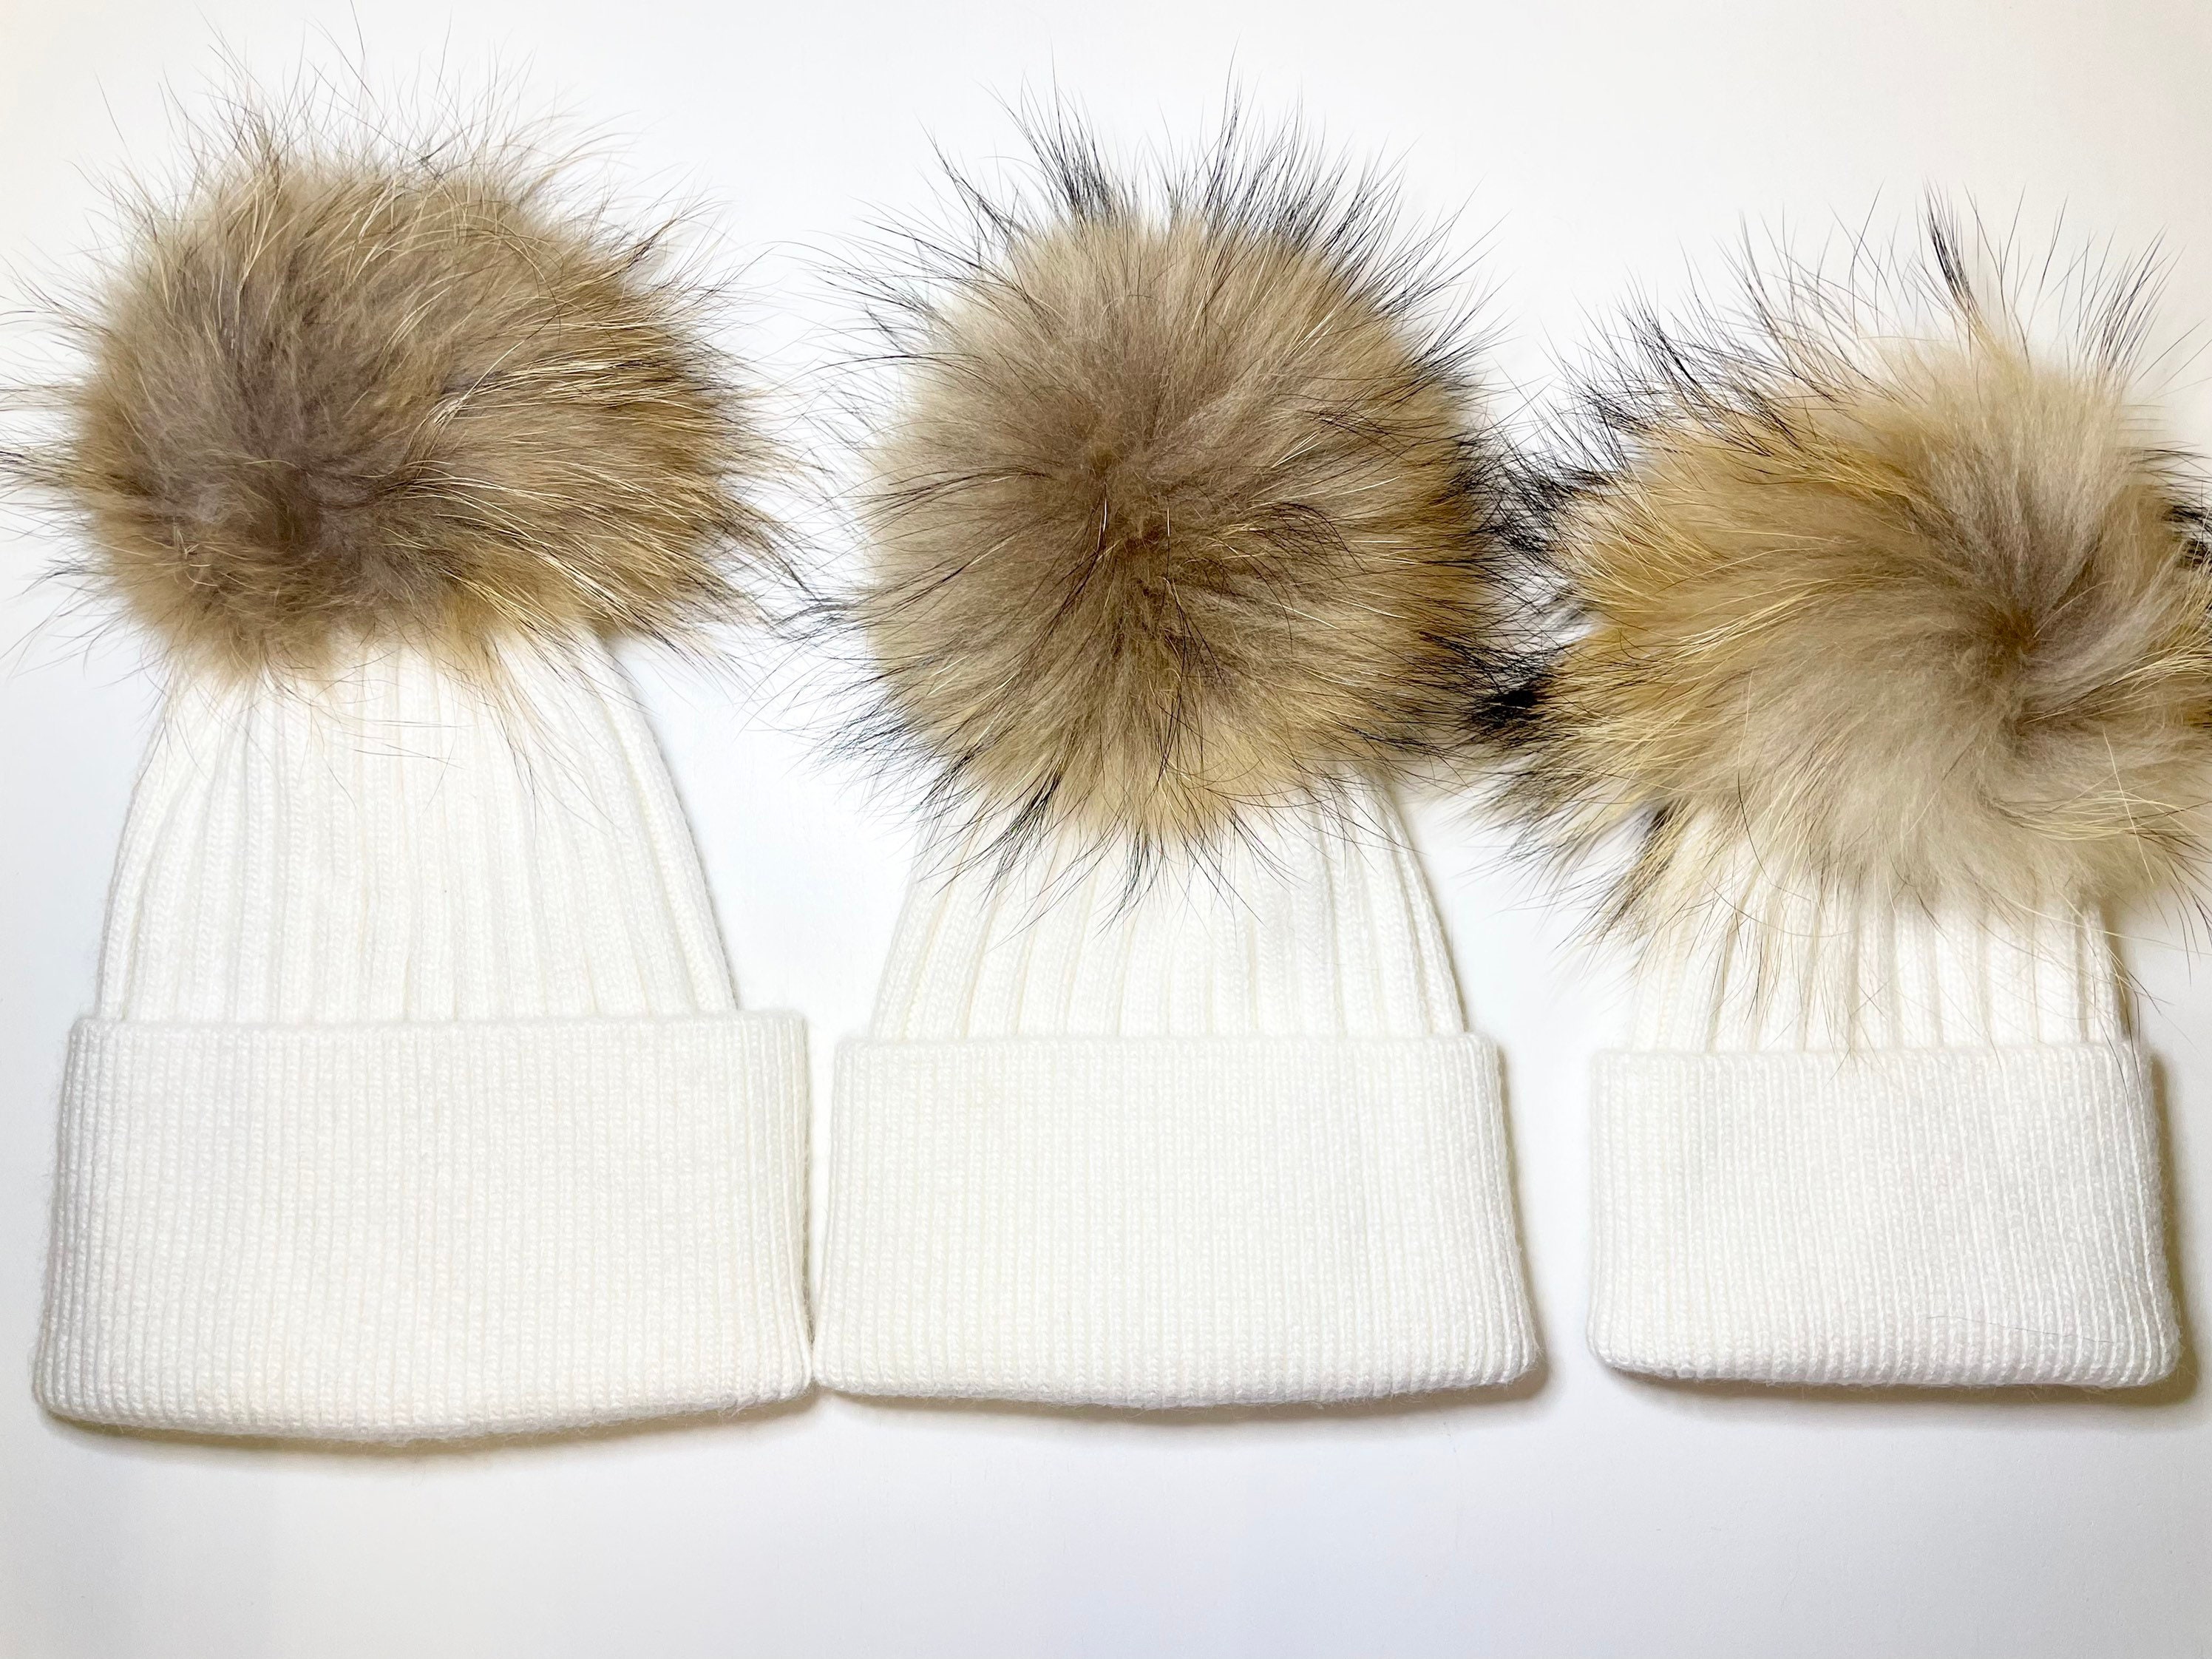 Cashmere double pom pom hat, Beanie, Knit hat, real fur pom pom hat, cozy  and super soft women winter hat